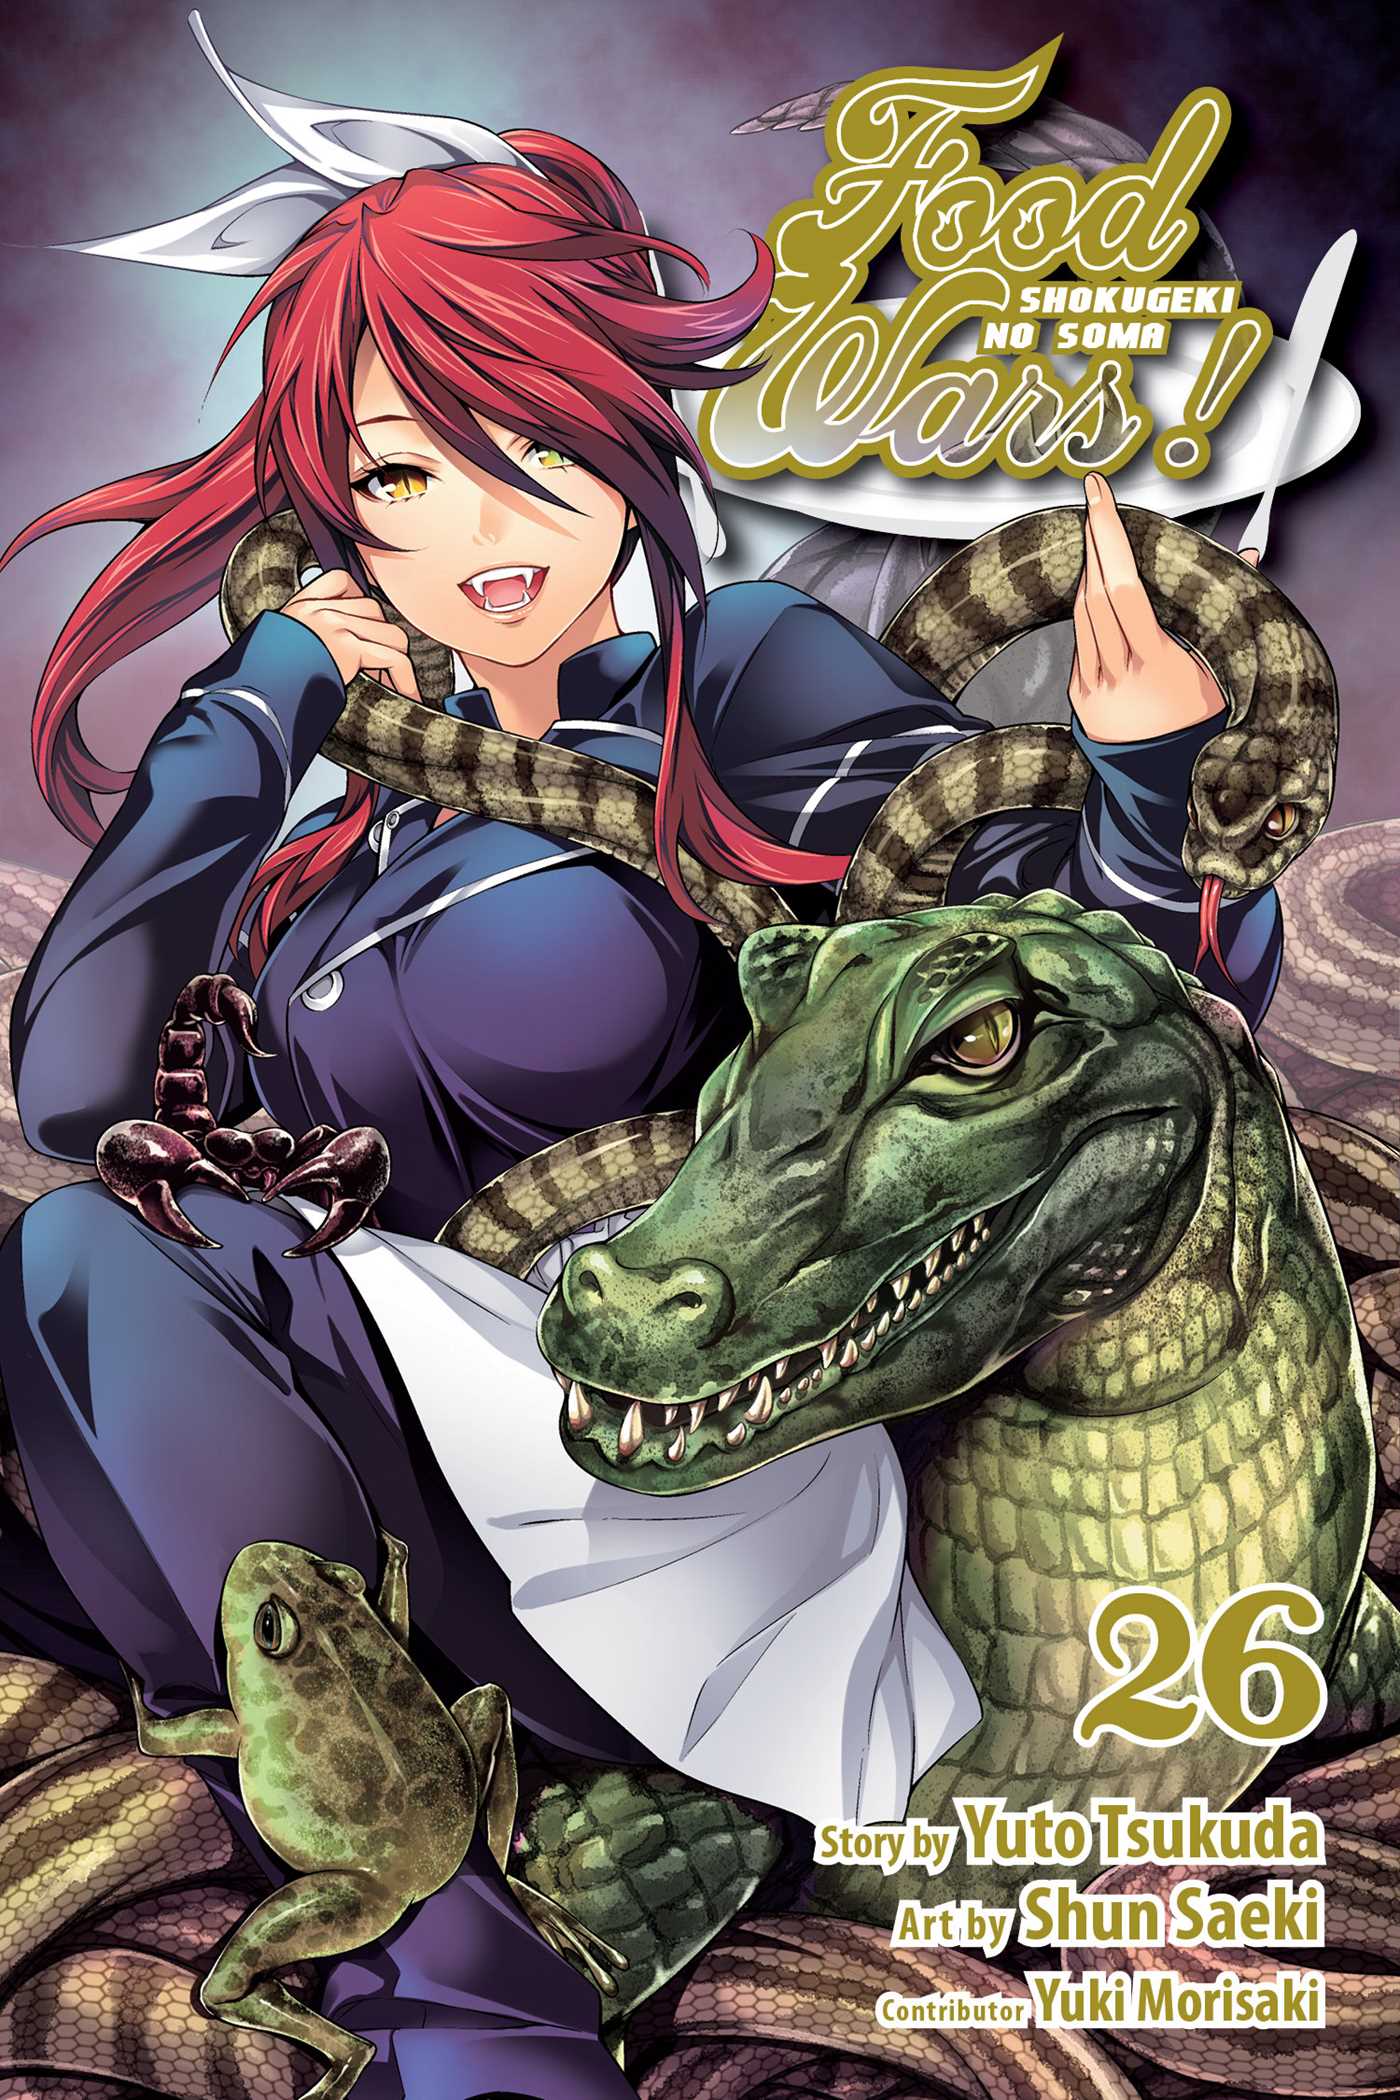 Food Wars!: Shokugeki no Soma Vol. 26 Review